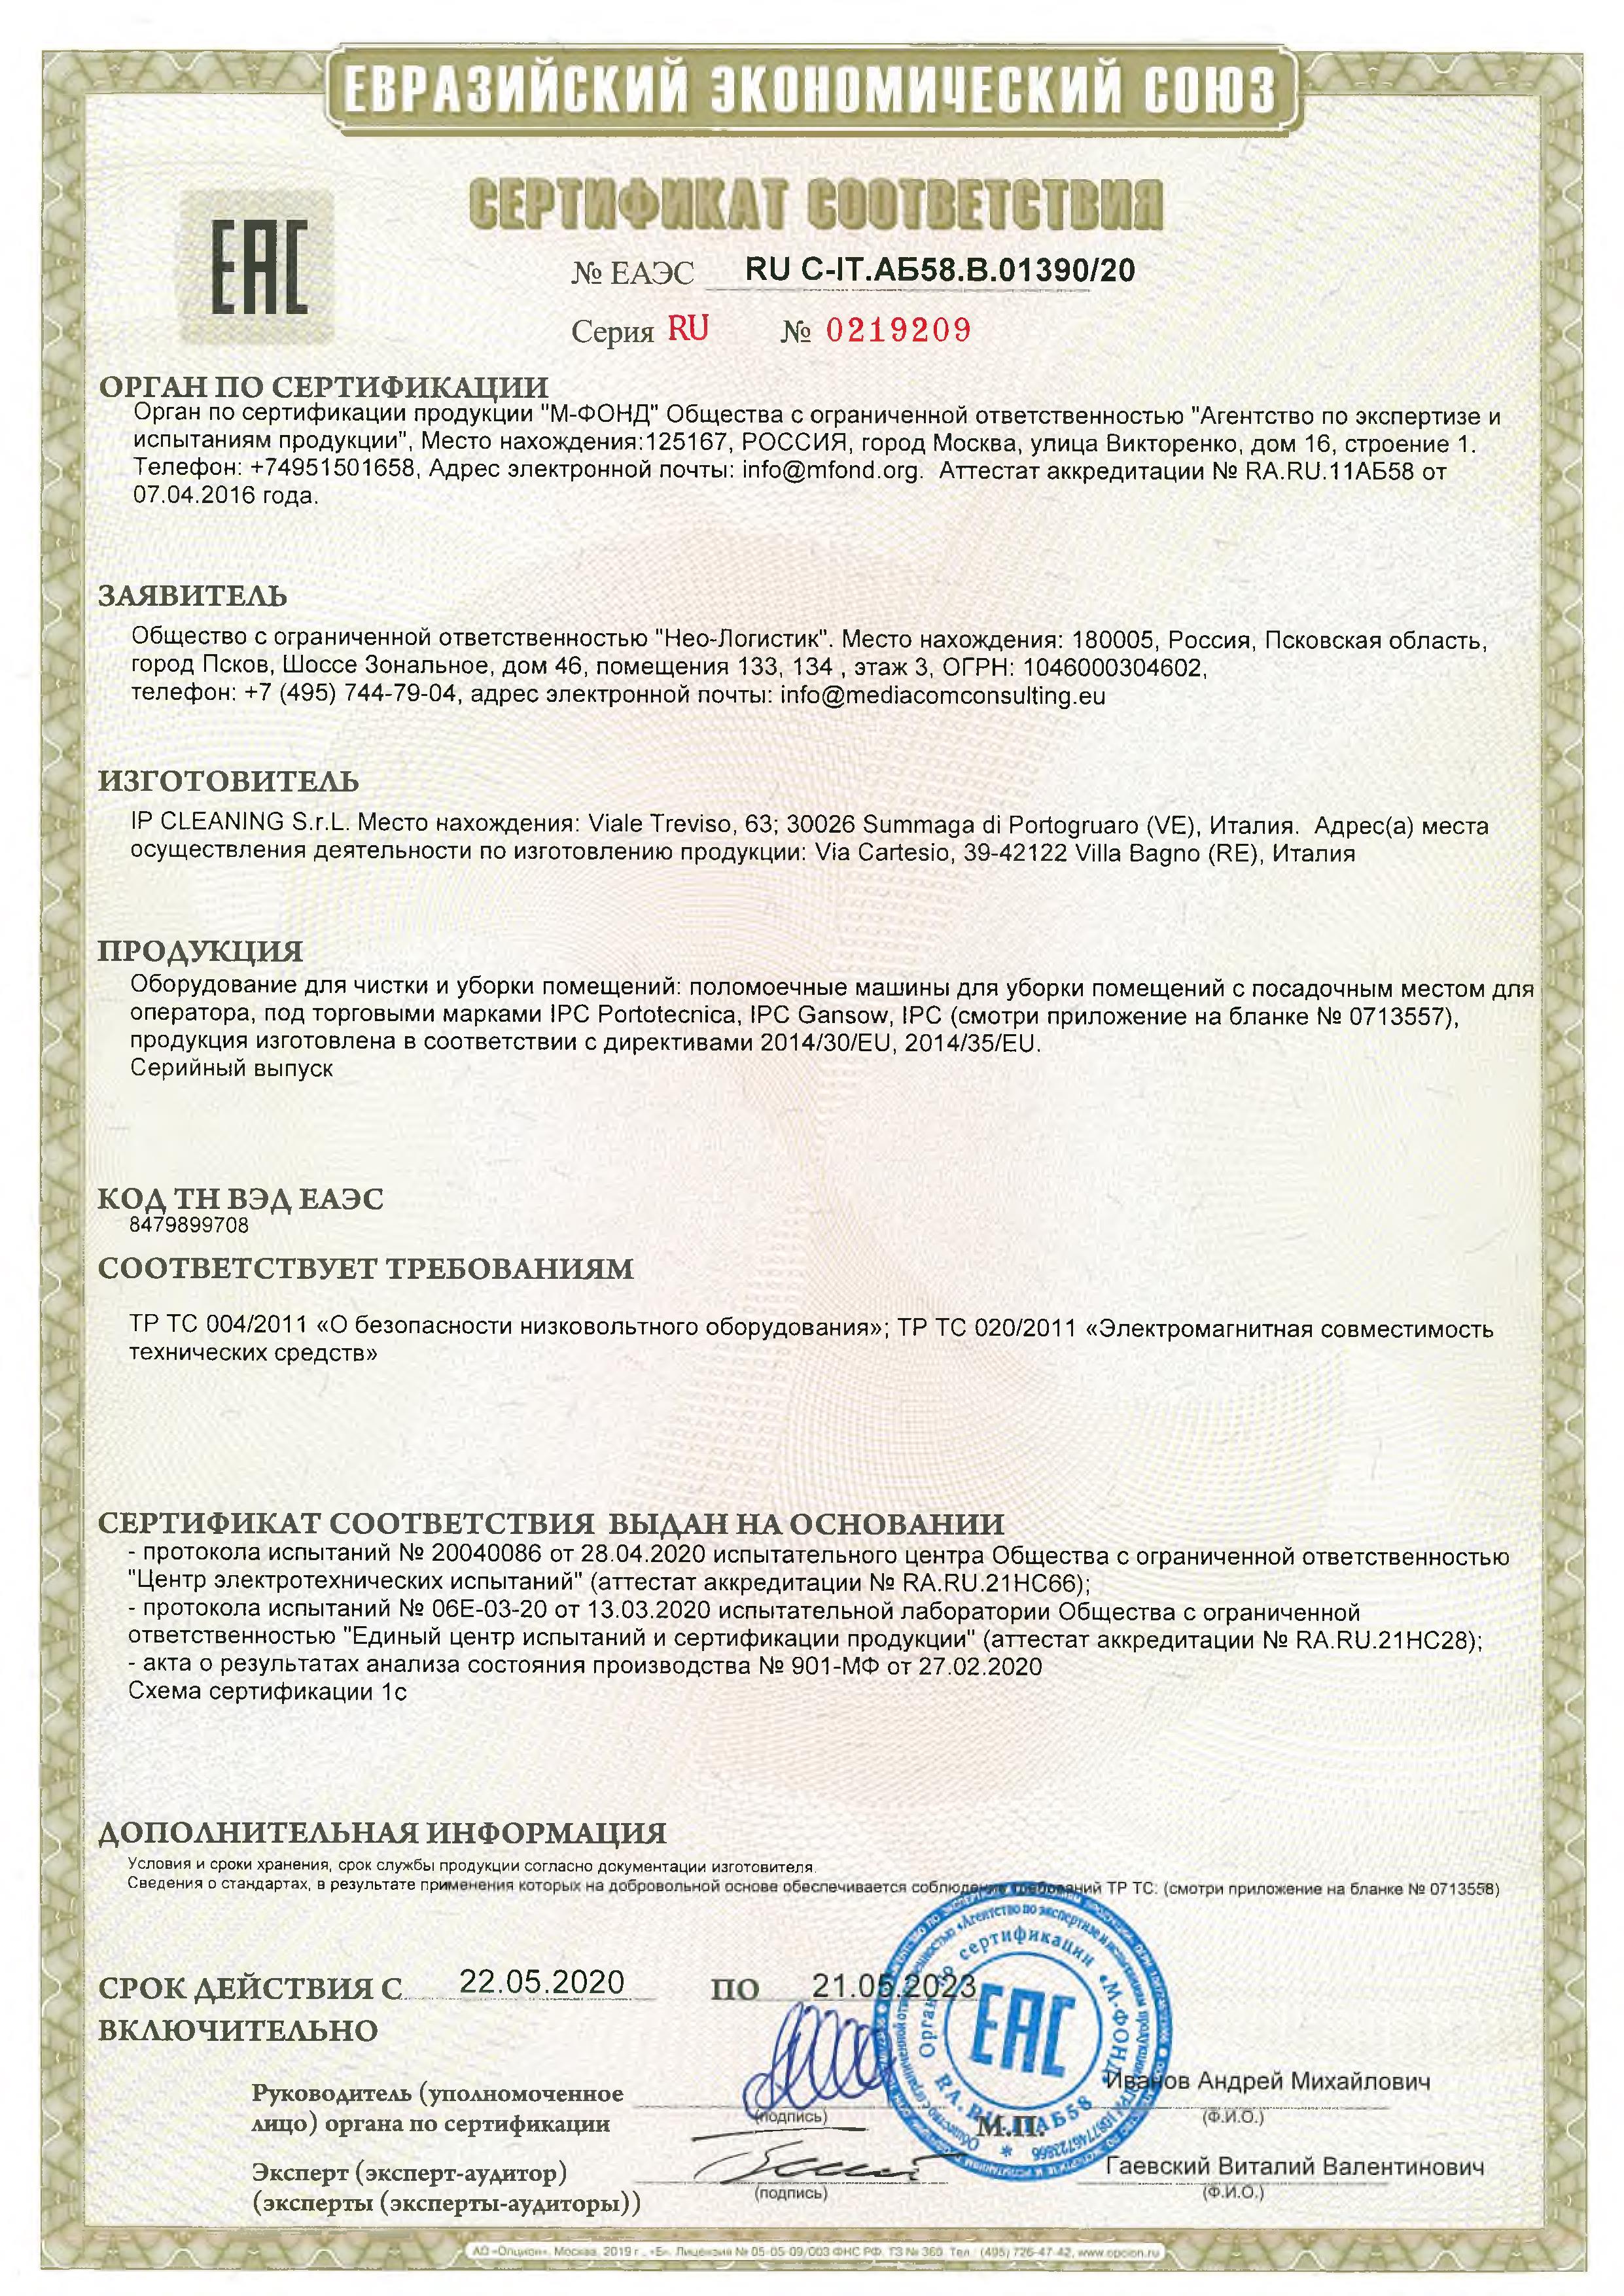 Сертификат соответствия IPC Portotecnika